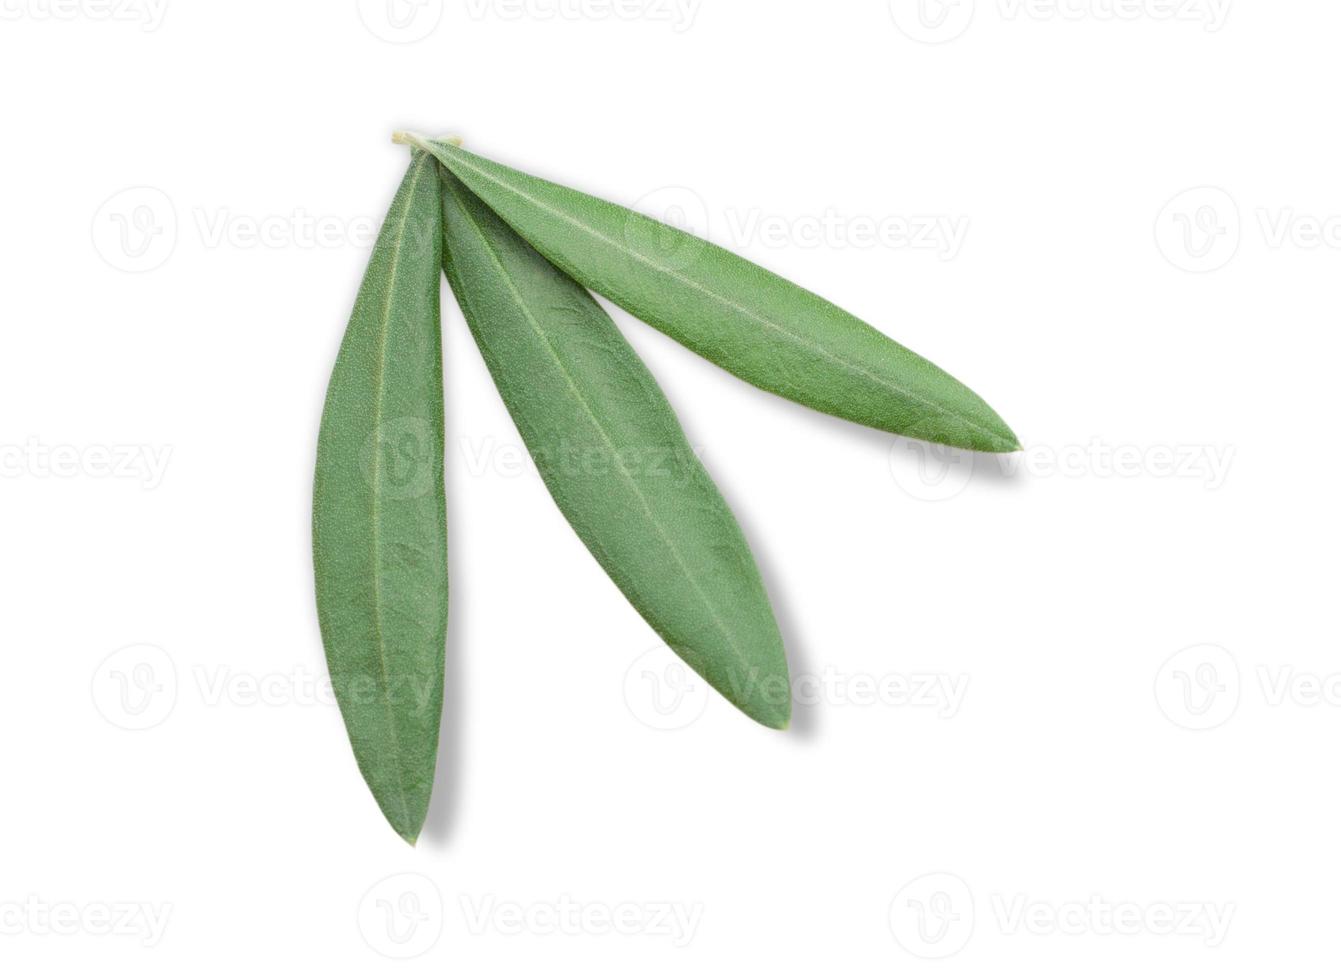 hojas de rama de olivo frescas aisladas sobre fondo blanco foto